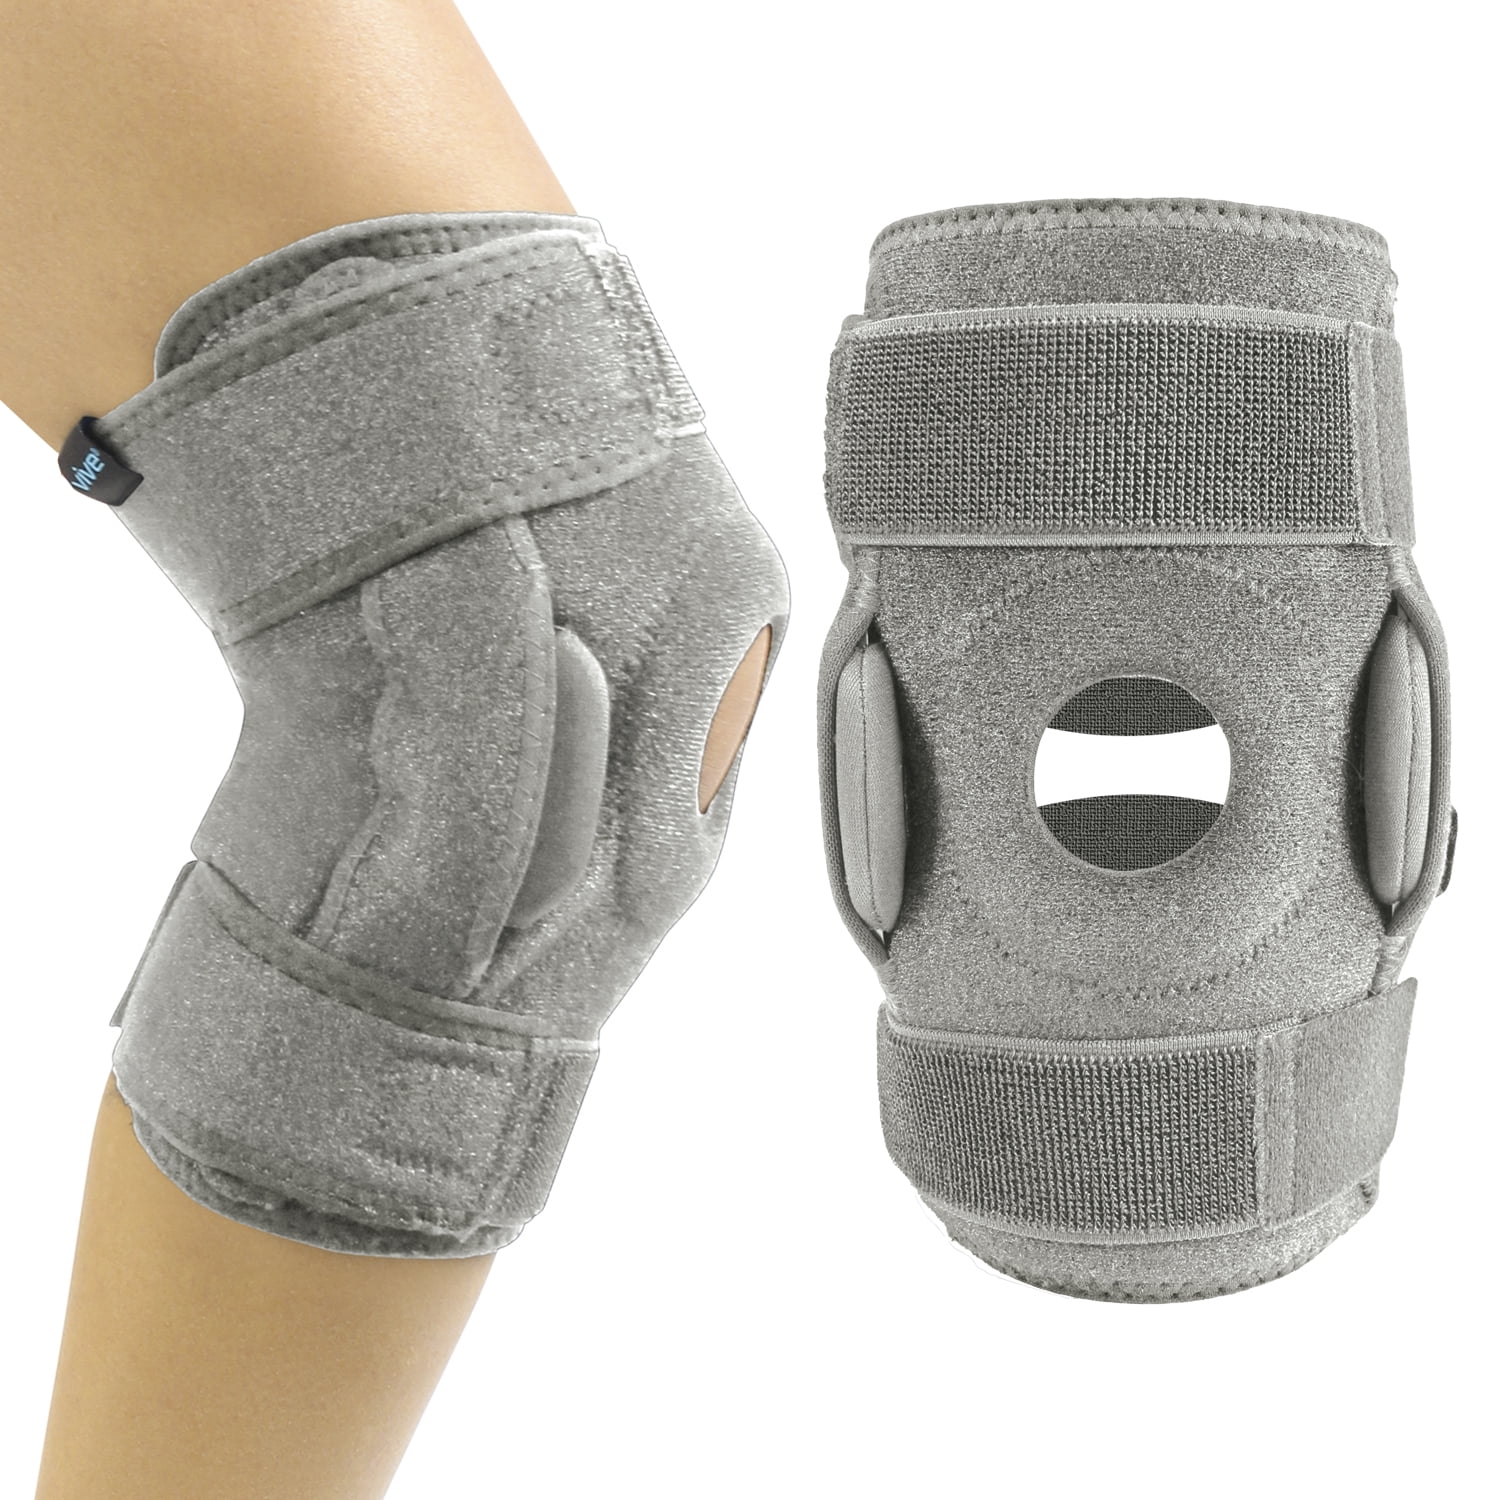  OrthoSleeve Orthopedic Brace for Arthritis, Tendinitis, ACL,  MCL, Injury Recovery, Meniscus Tear, knee pain, aching knees, patellar  tendonitis and arthritis (Small, Tan, Single) : Health & Household